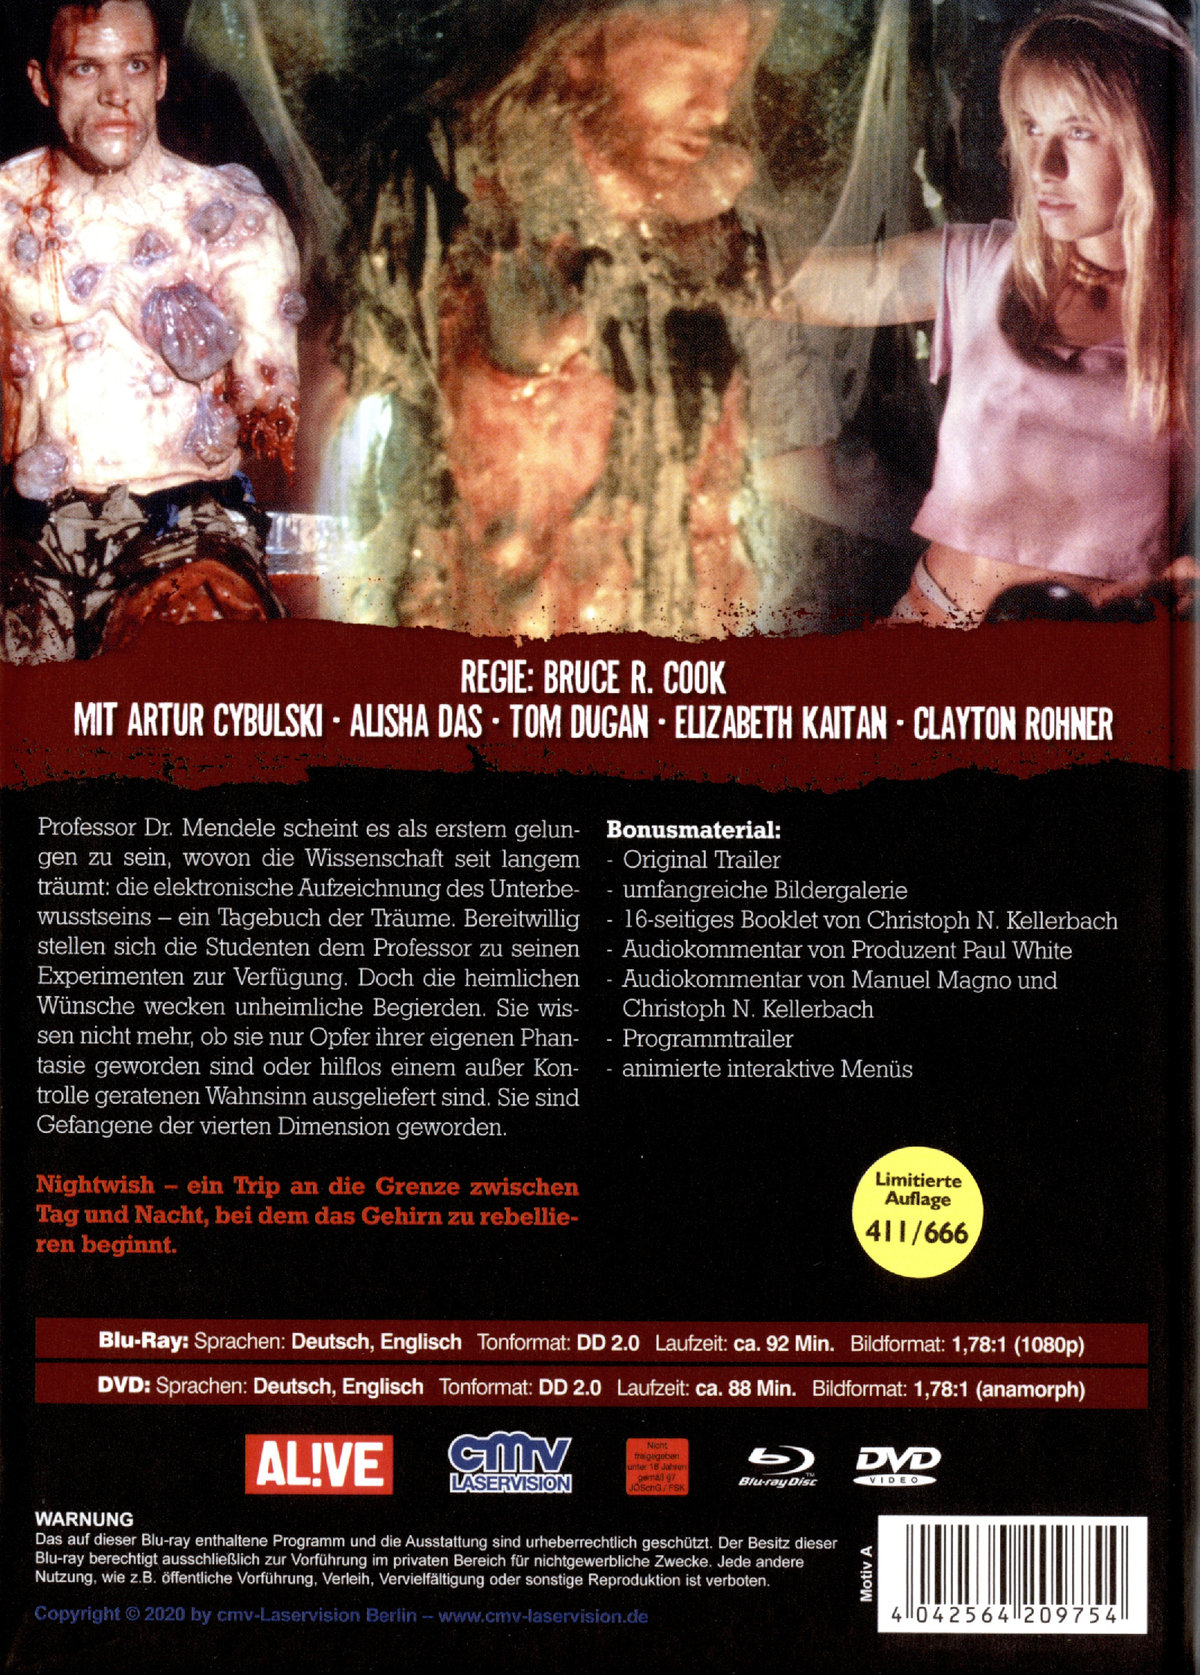 Nightwish – Out of Control - Uncut Mediabook Edition (DVD+blu-ray) (A)